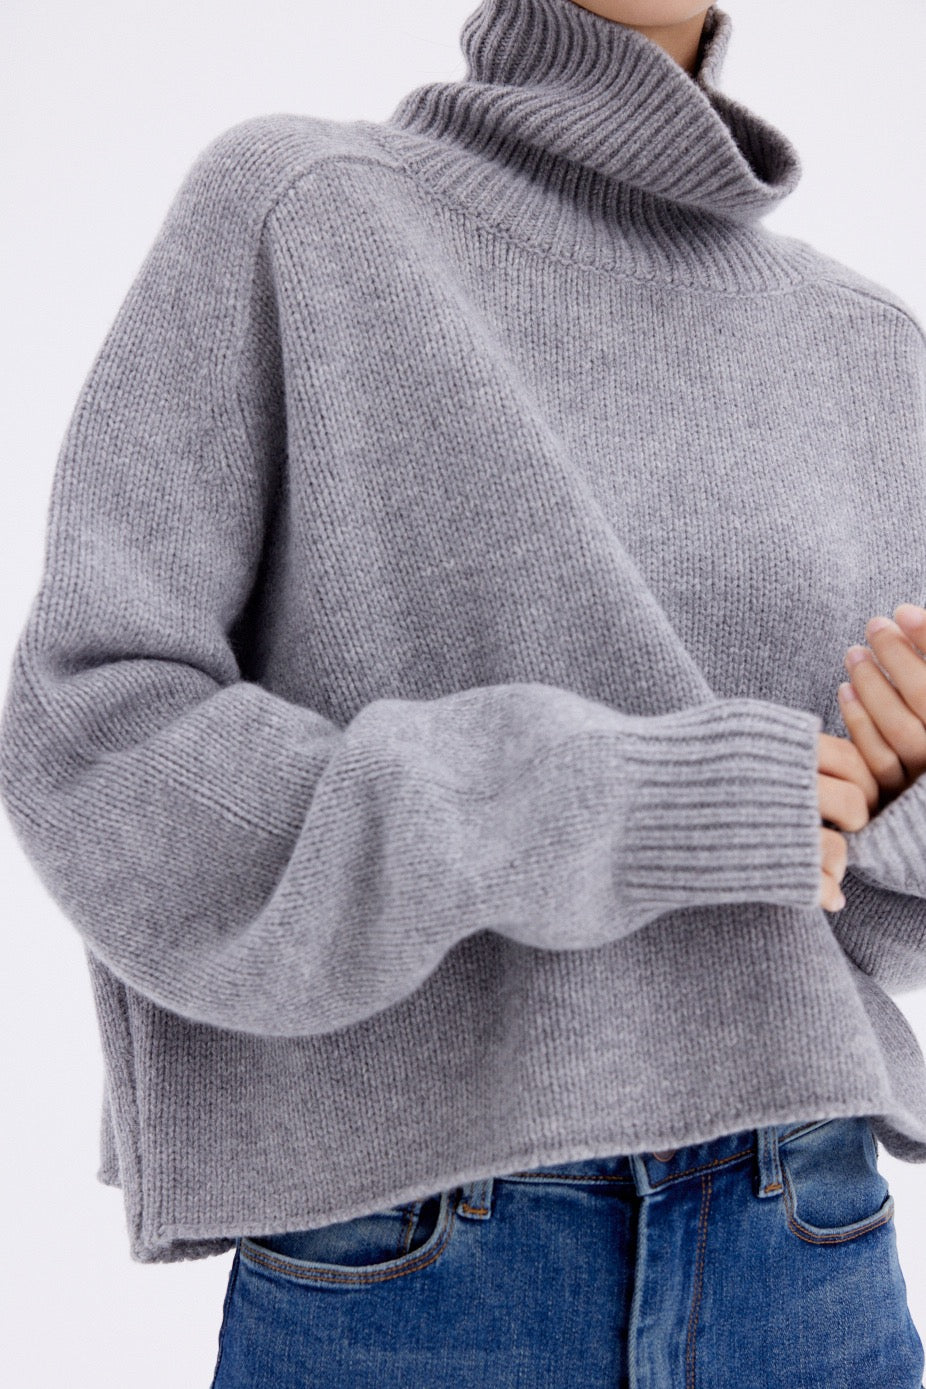 EHUD Wool Turtleneck Sweater